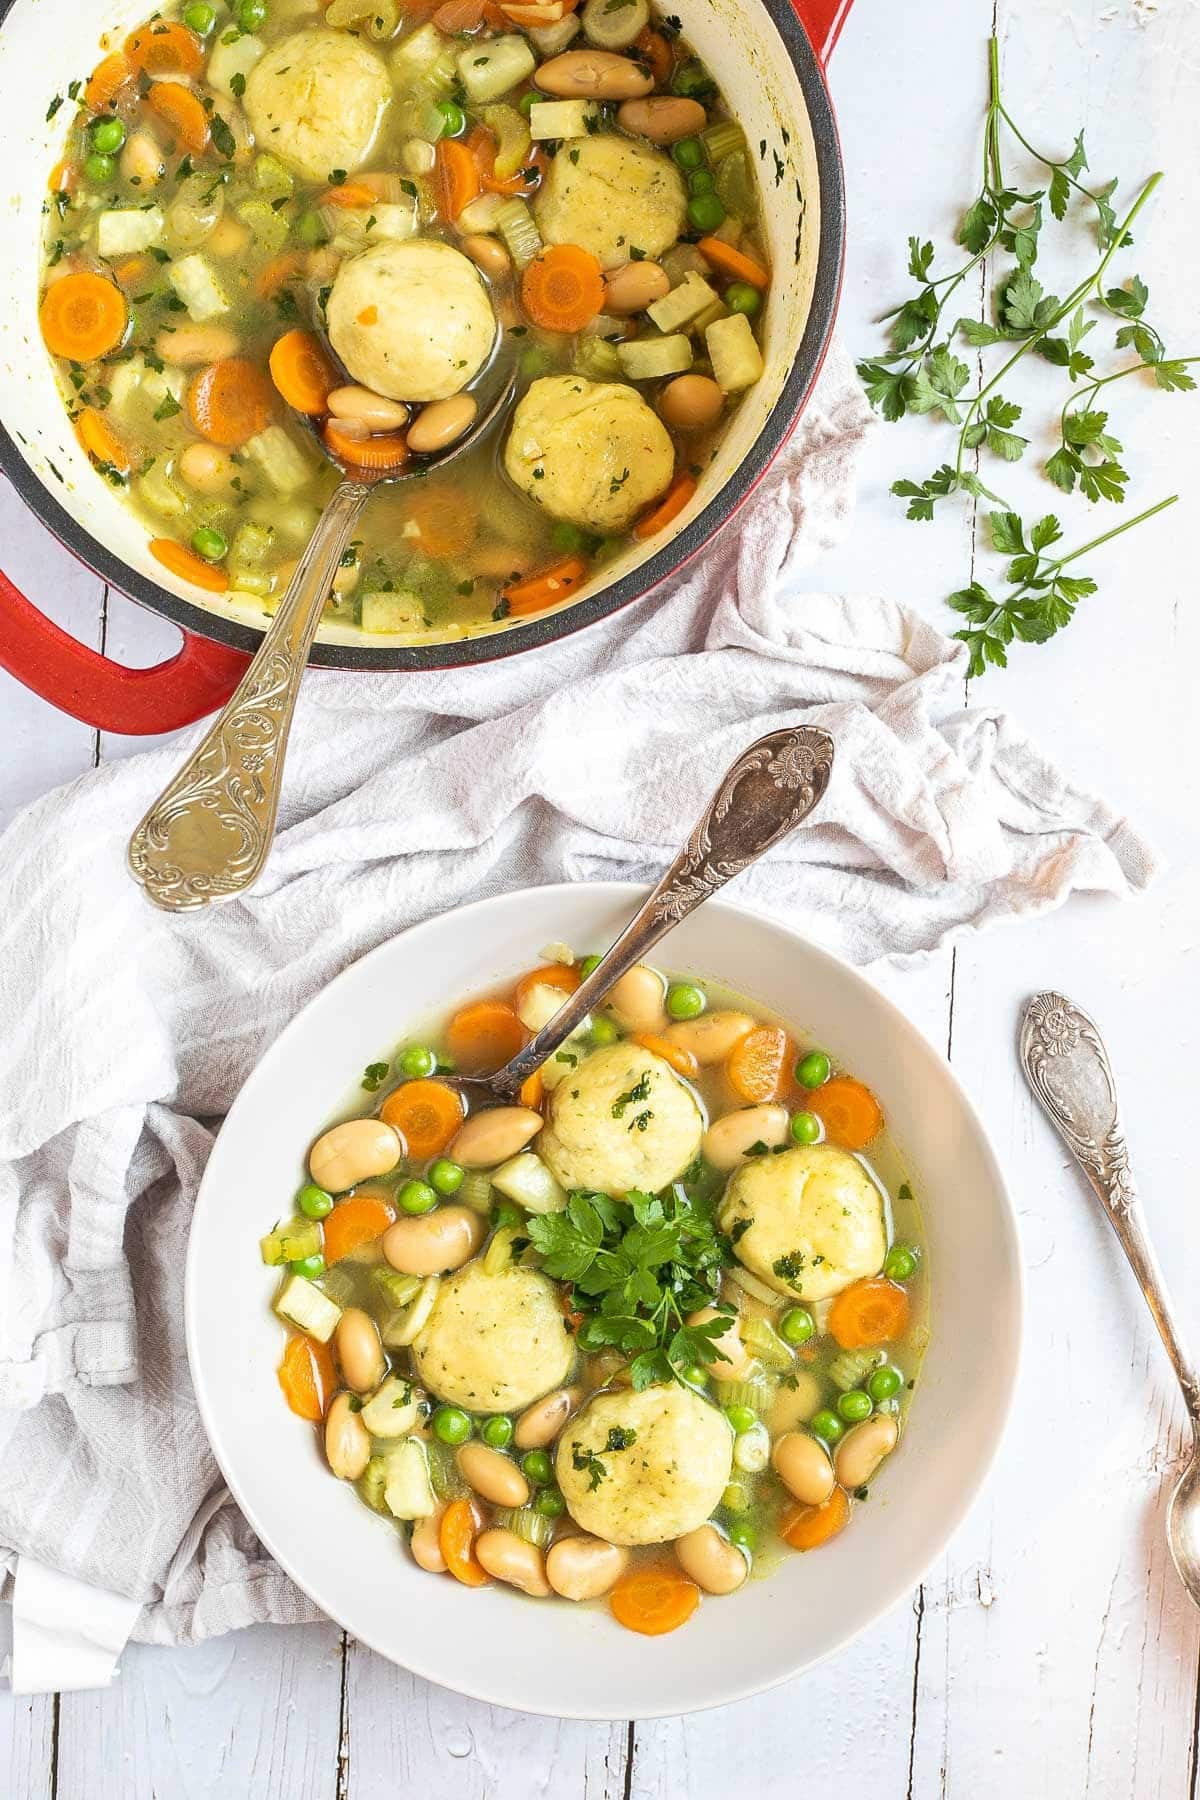 Vegan dumpling soup with peas, lima beans, celery, and carrots in a bowl with vegan dumplings- top view